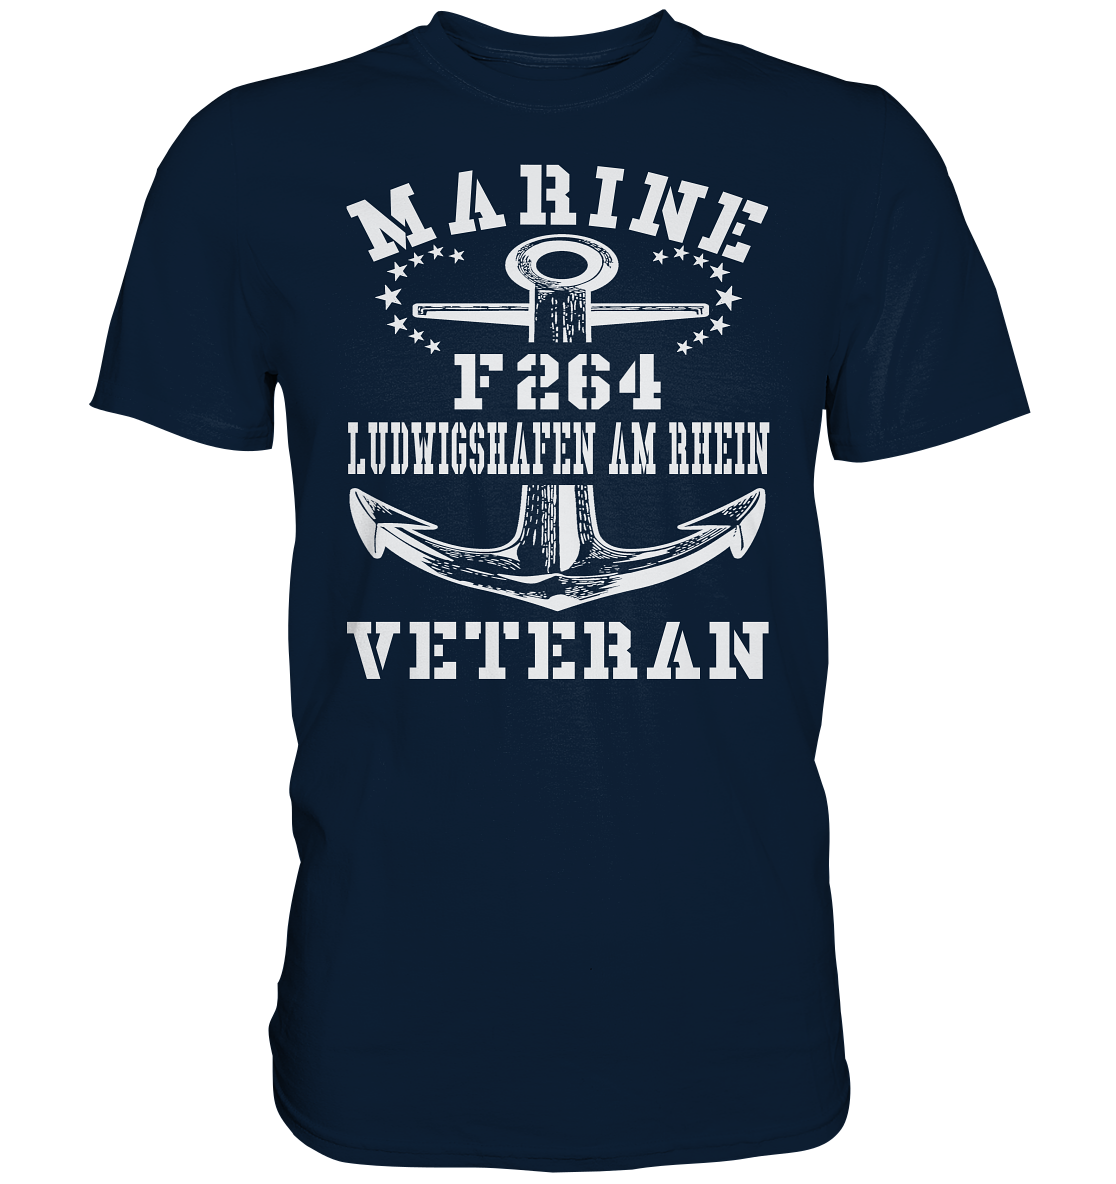 Korvette F264 LUDWIGSHAFEN AM RHEIN Marine Veteran - Premium Shirt